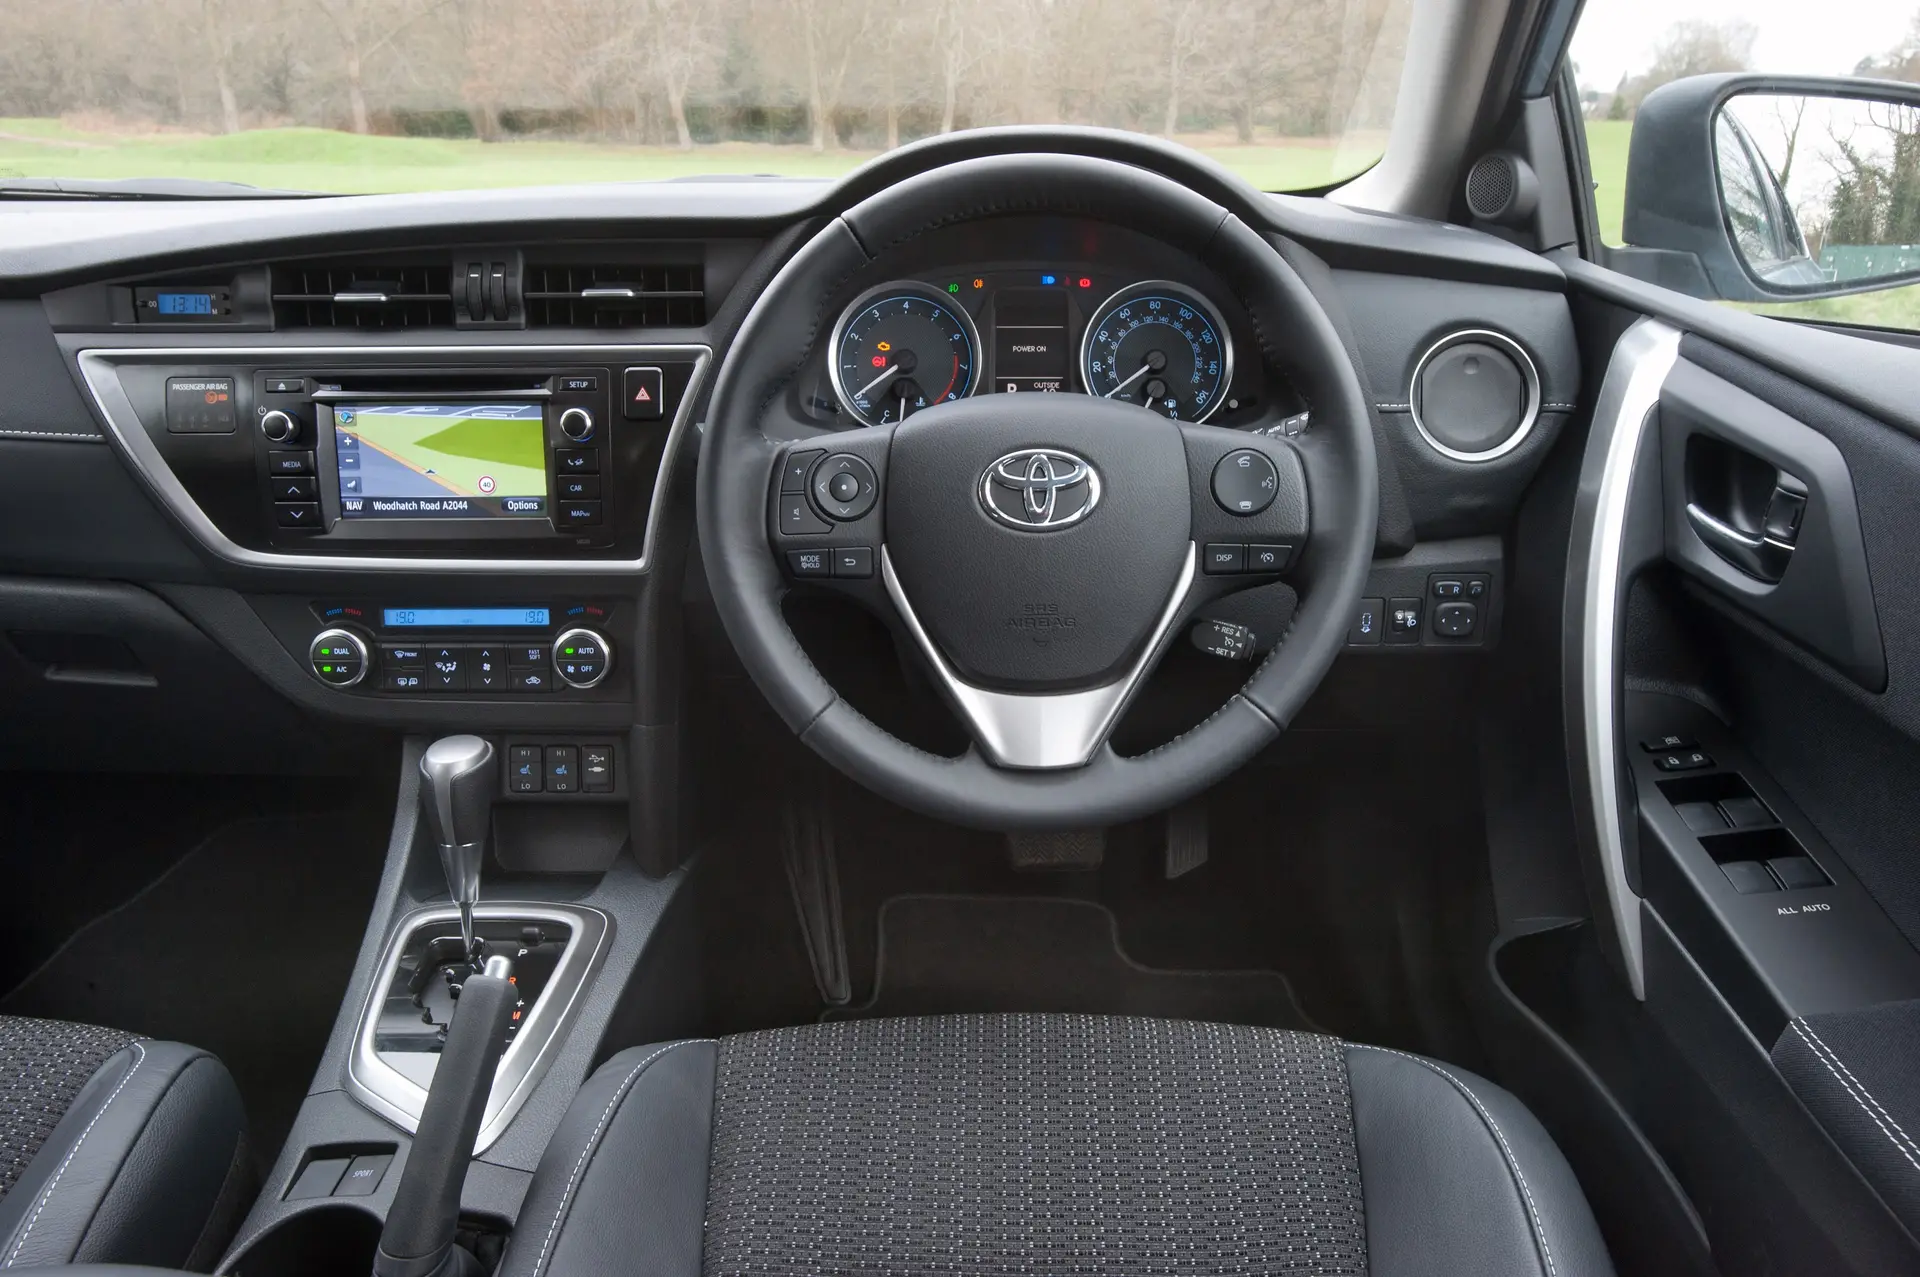 Toyota Auris review